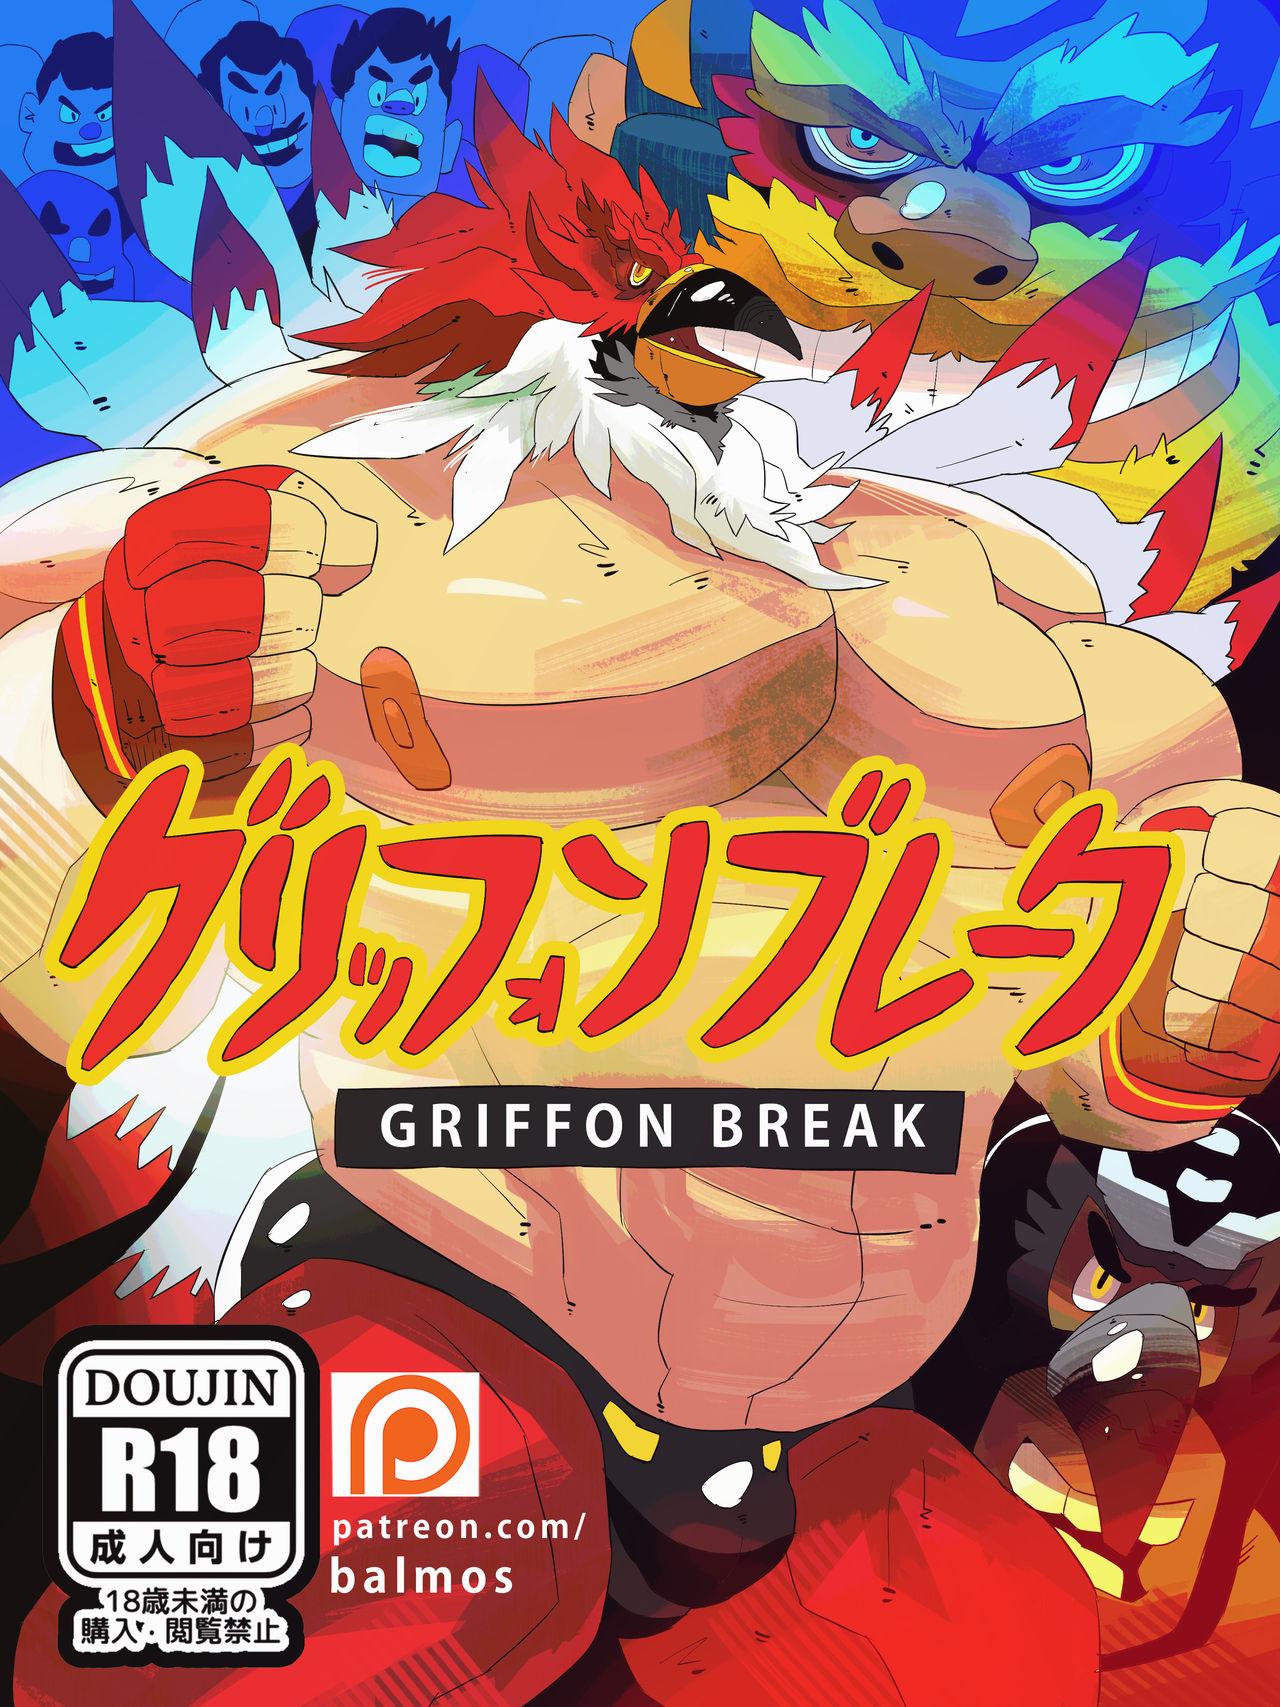 Passion Griffon Break HD - King of fighters Fatal fury | garou densetsu Girlfriends - Page 1